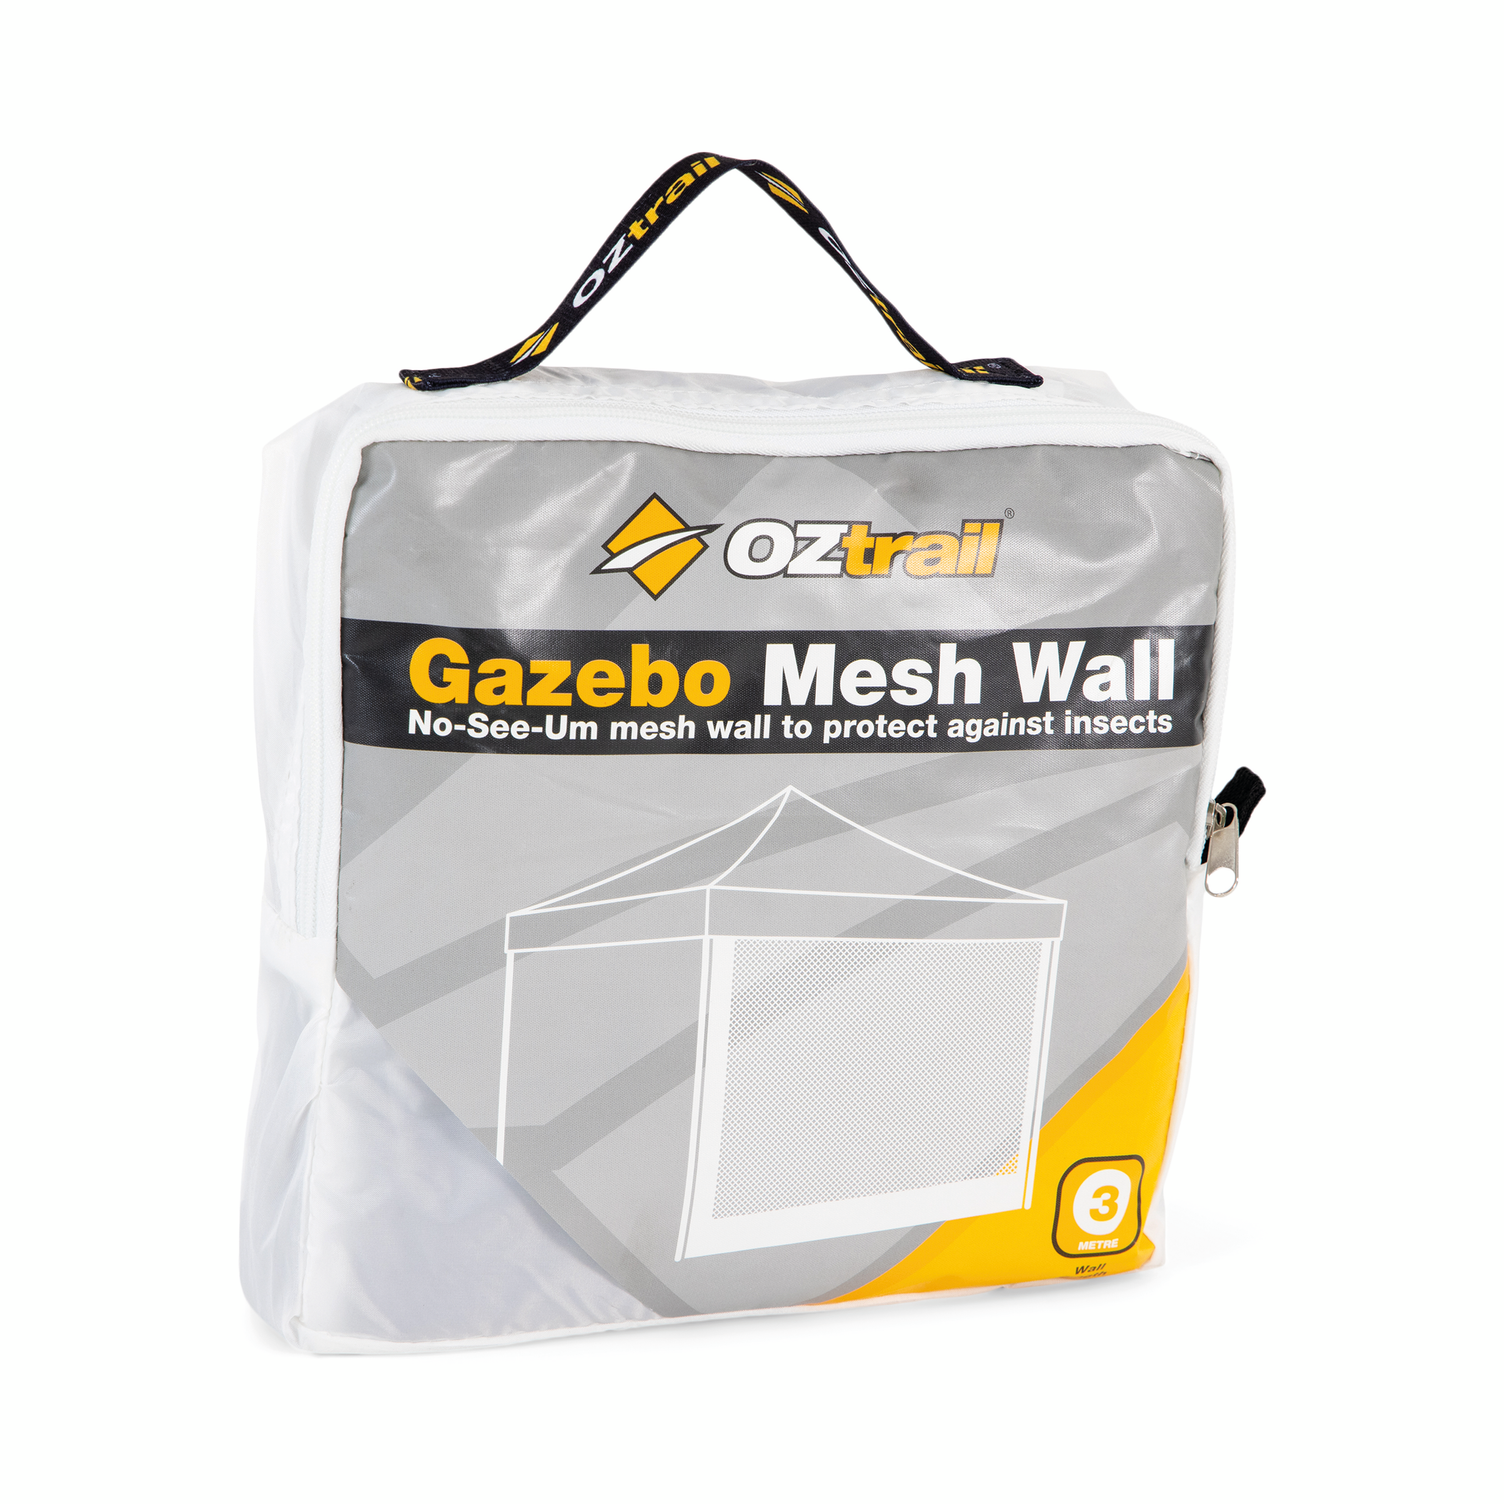 Gazebo Mesh Wall 3.0